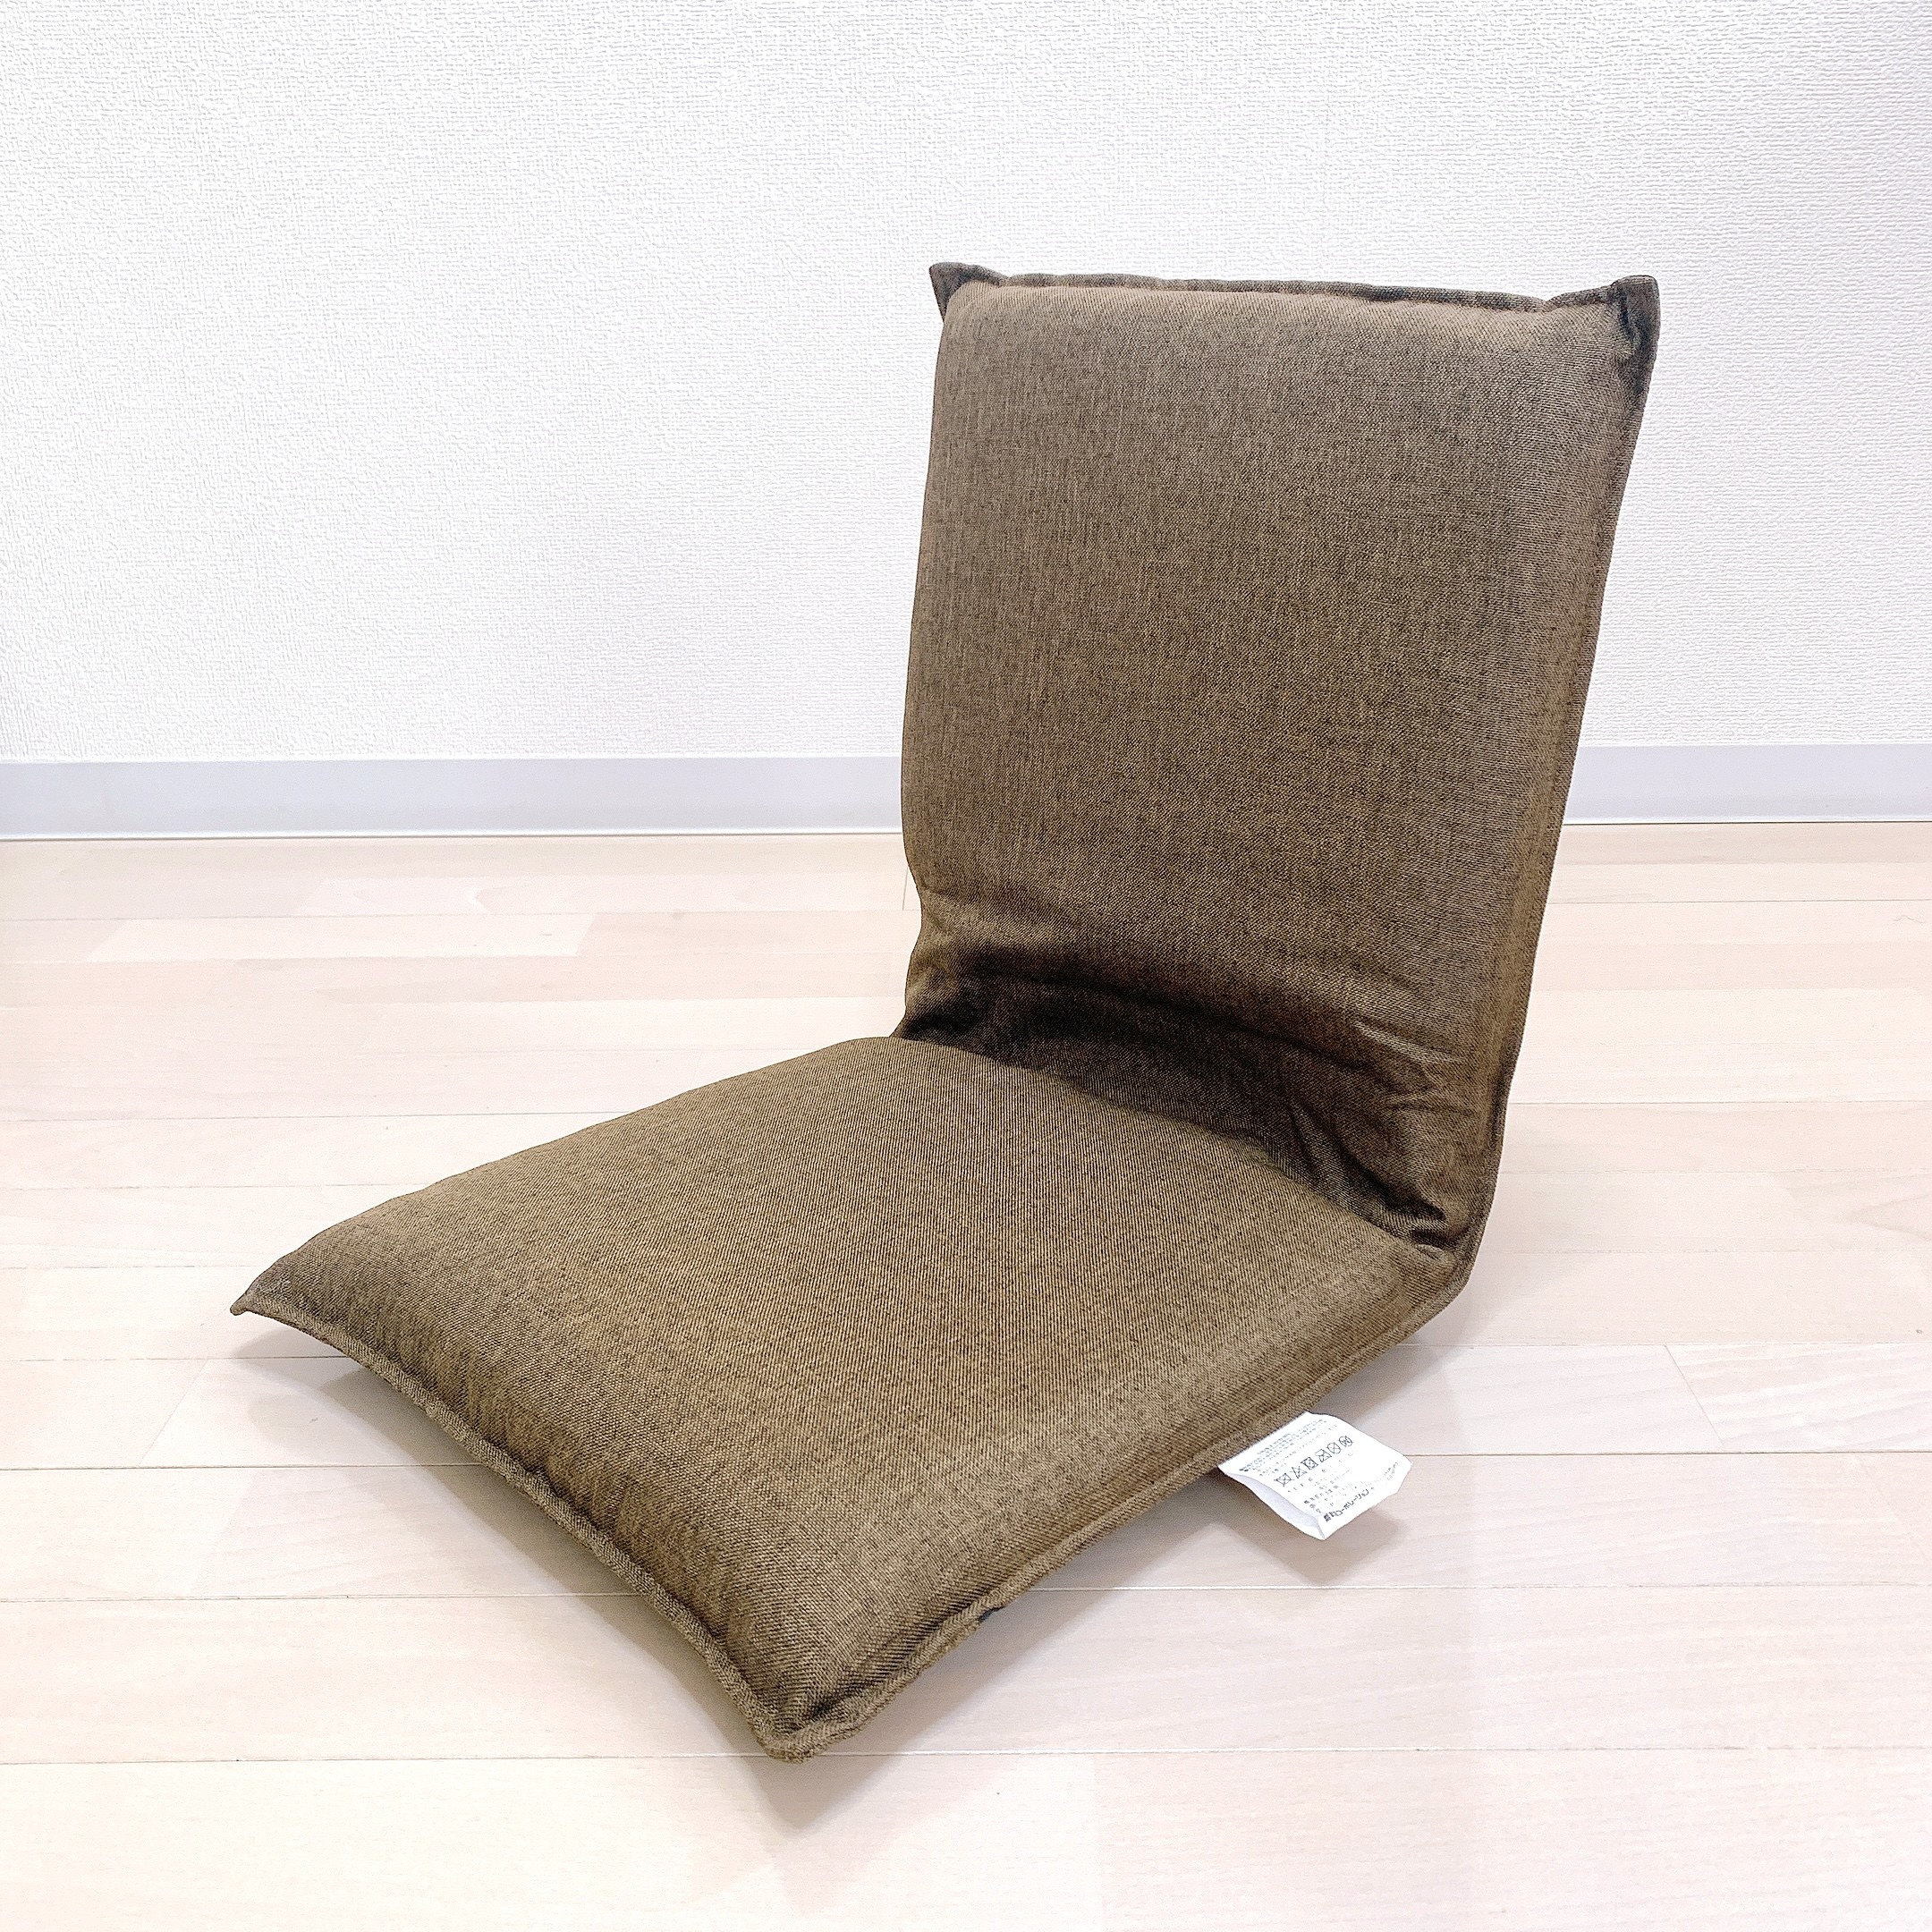 DAISO（ダイソー）のおすすめ便利アイテム「コンパクト座椅子」持ち運びや収納も楽ちん